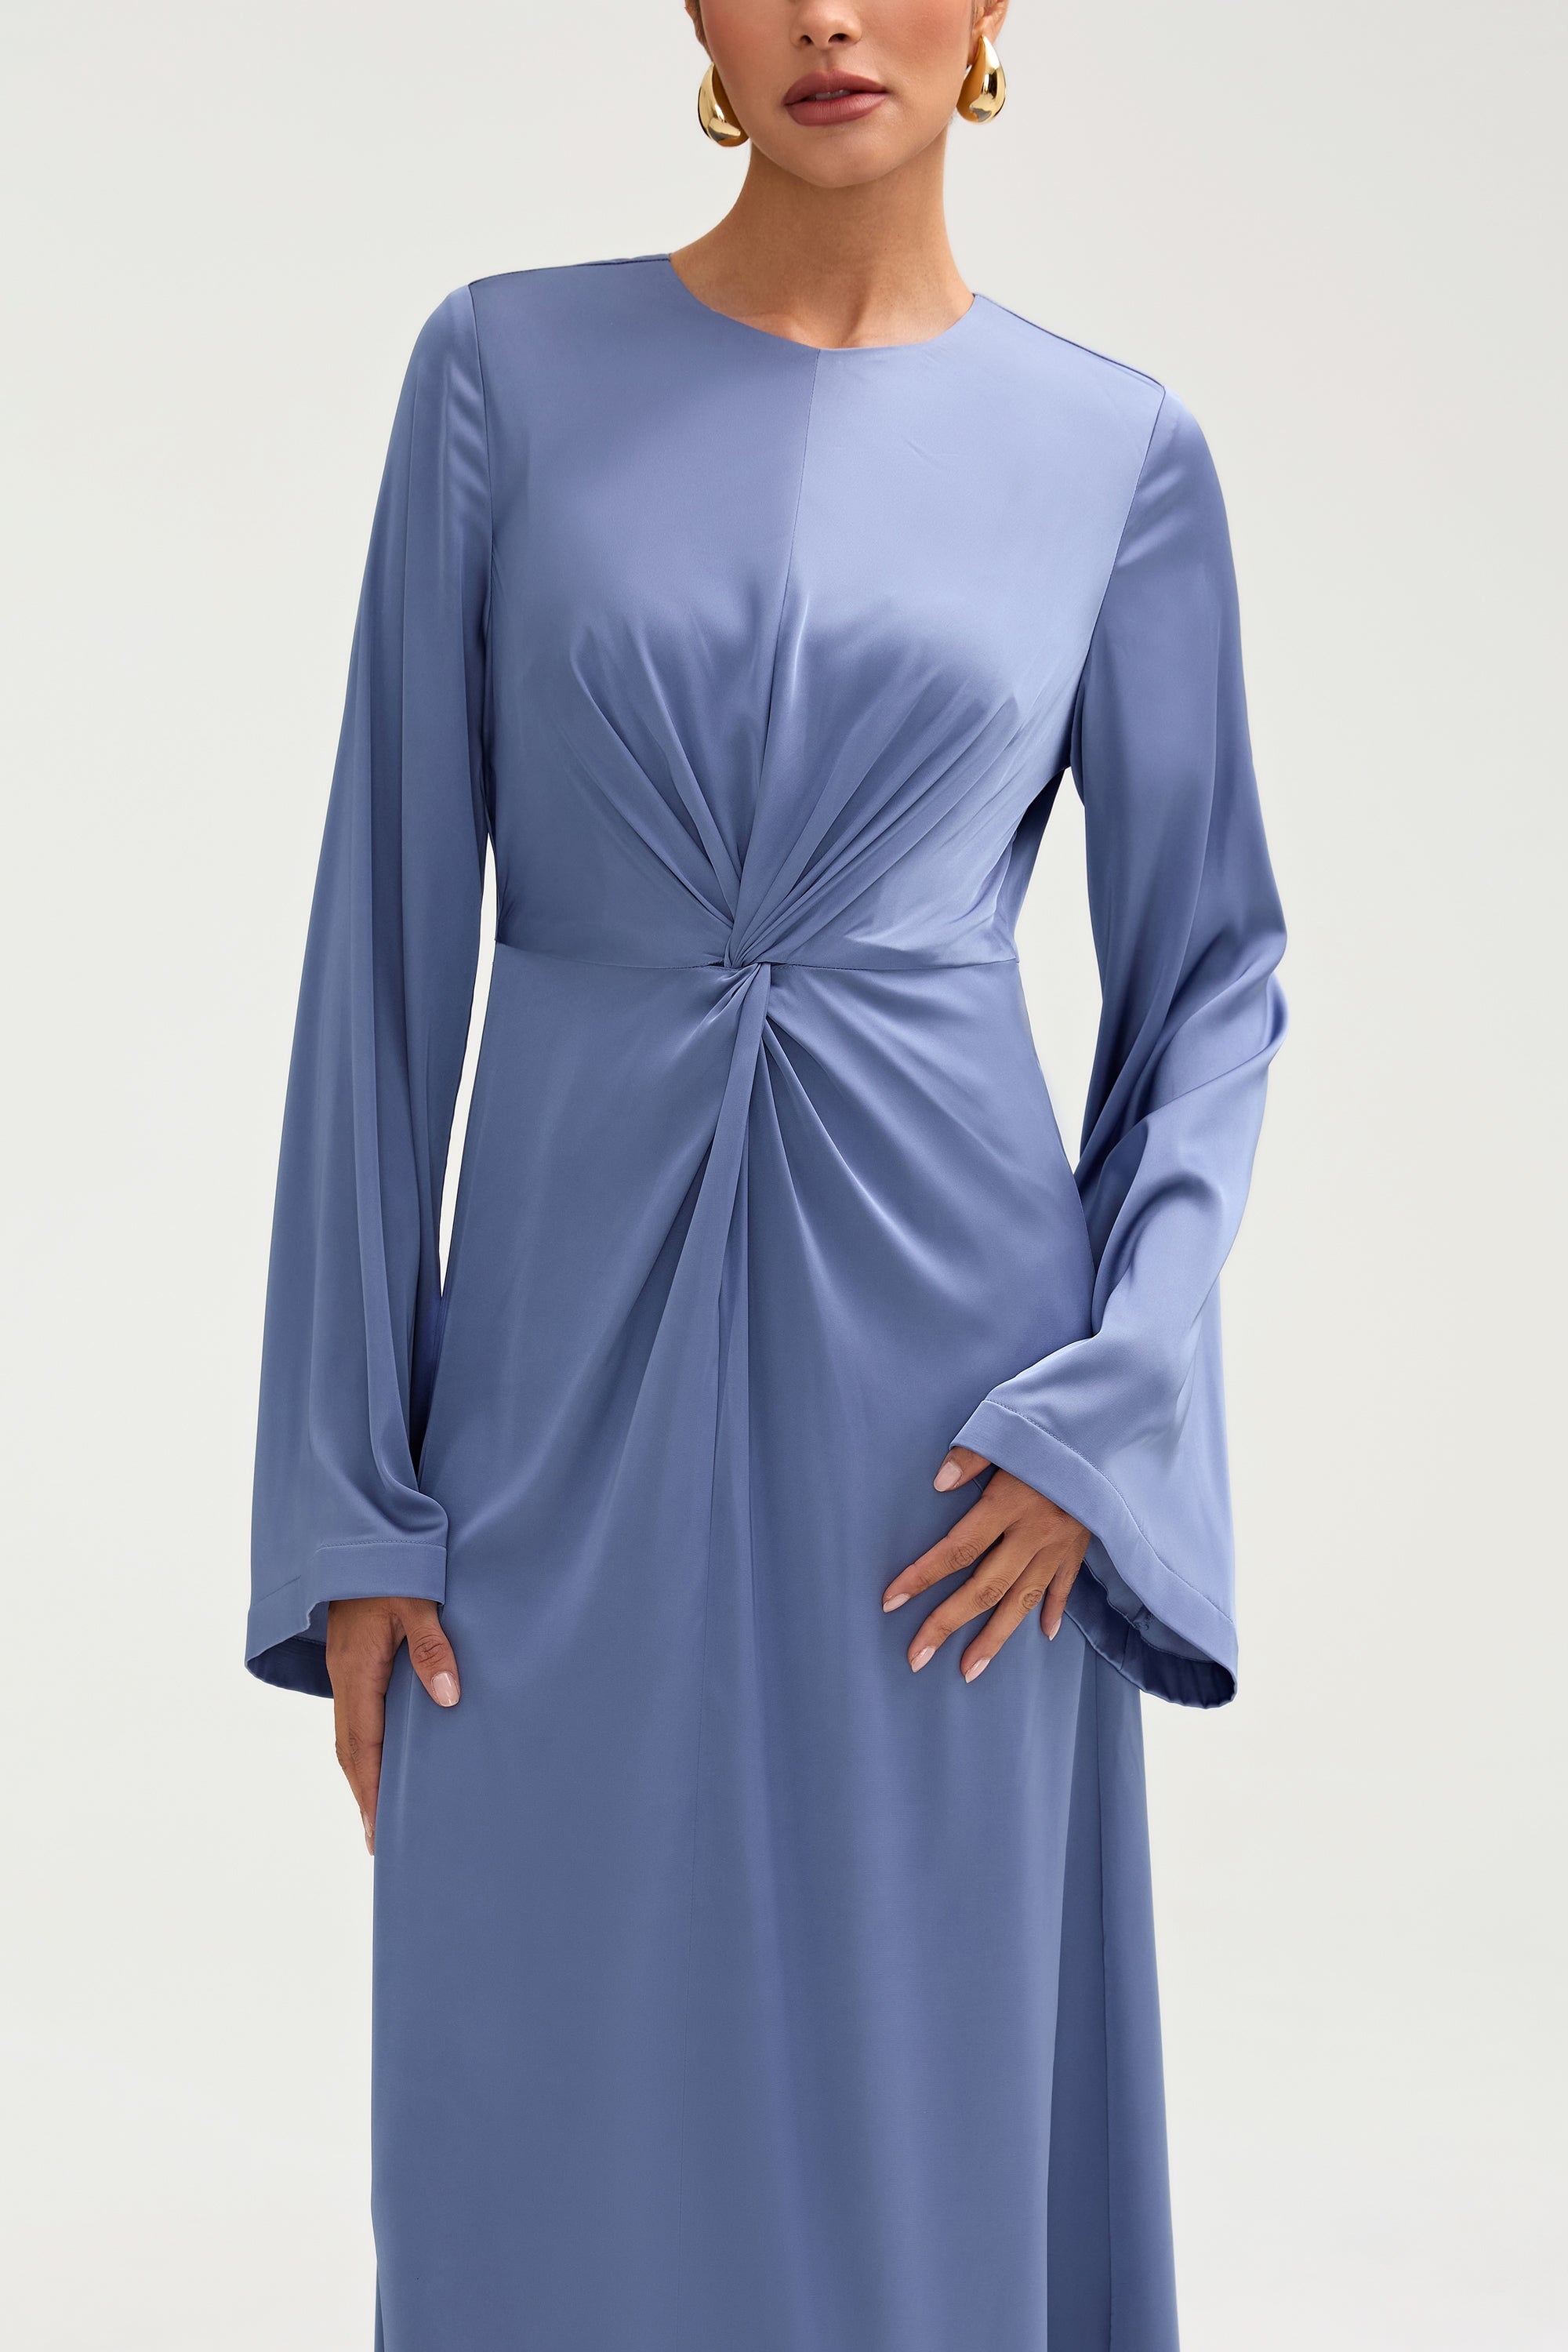 Duha Satin Twist Front Maxi Dress - Dusty Blue Clothing epschoolboard 